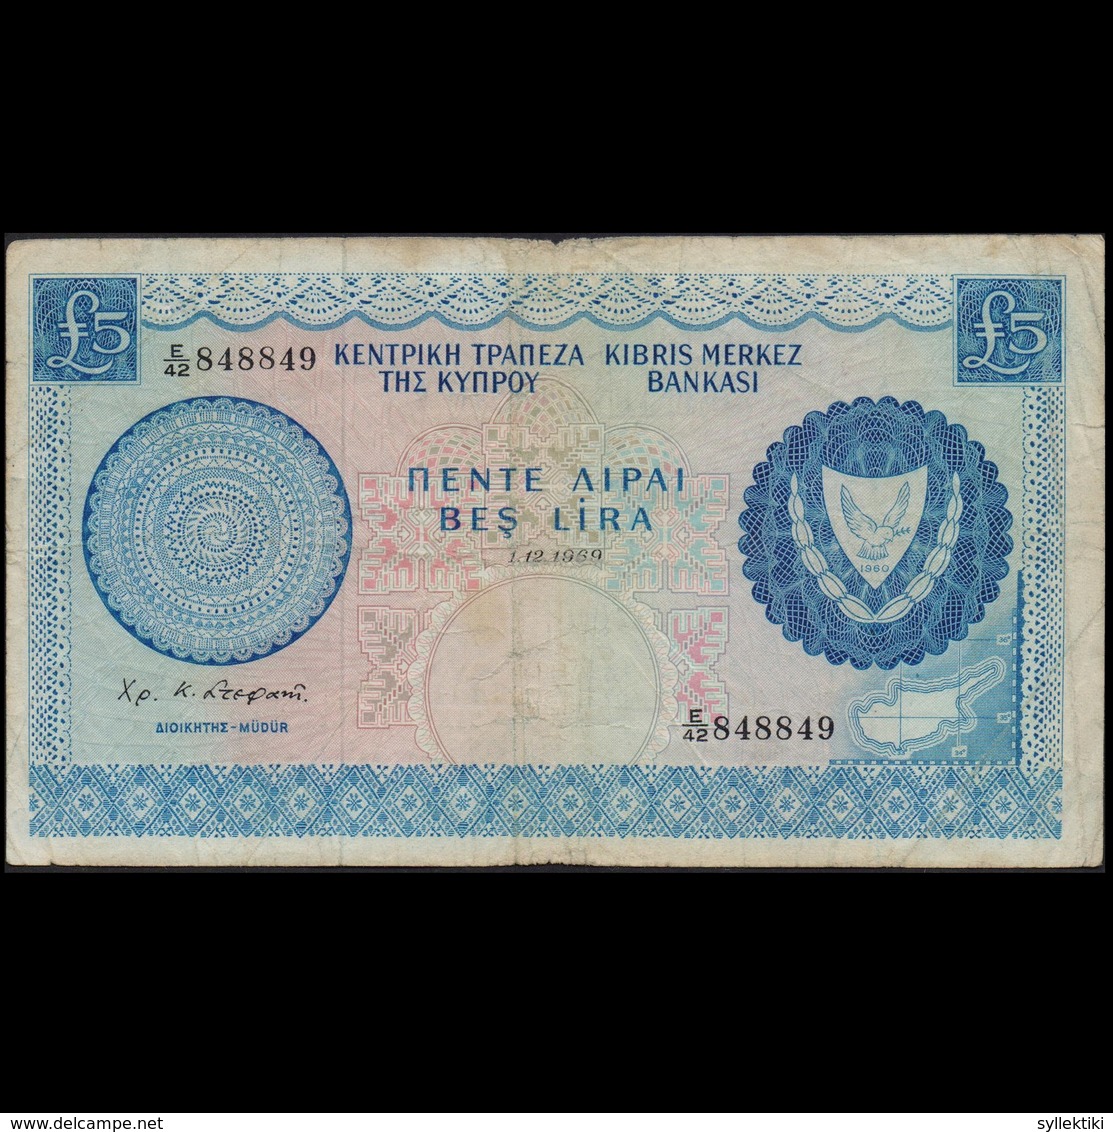 CYPRUS 1969 FIVE POUNDS BANKNOTE F - Zypern